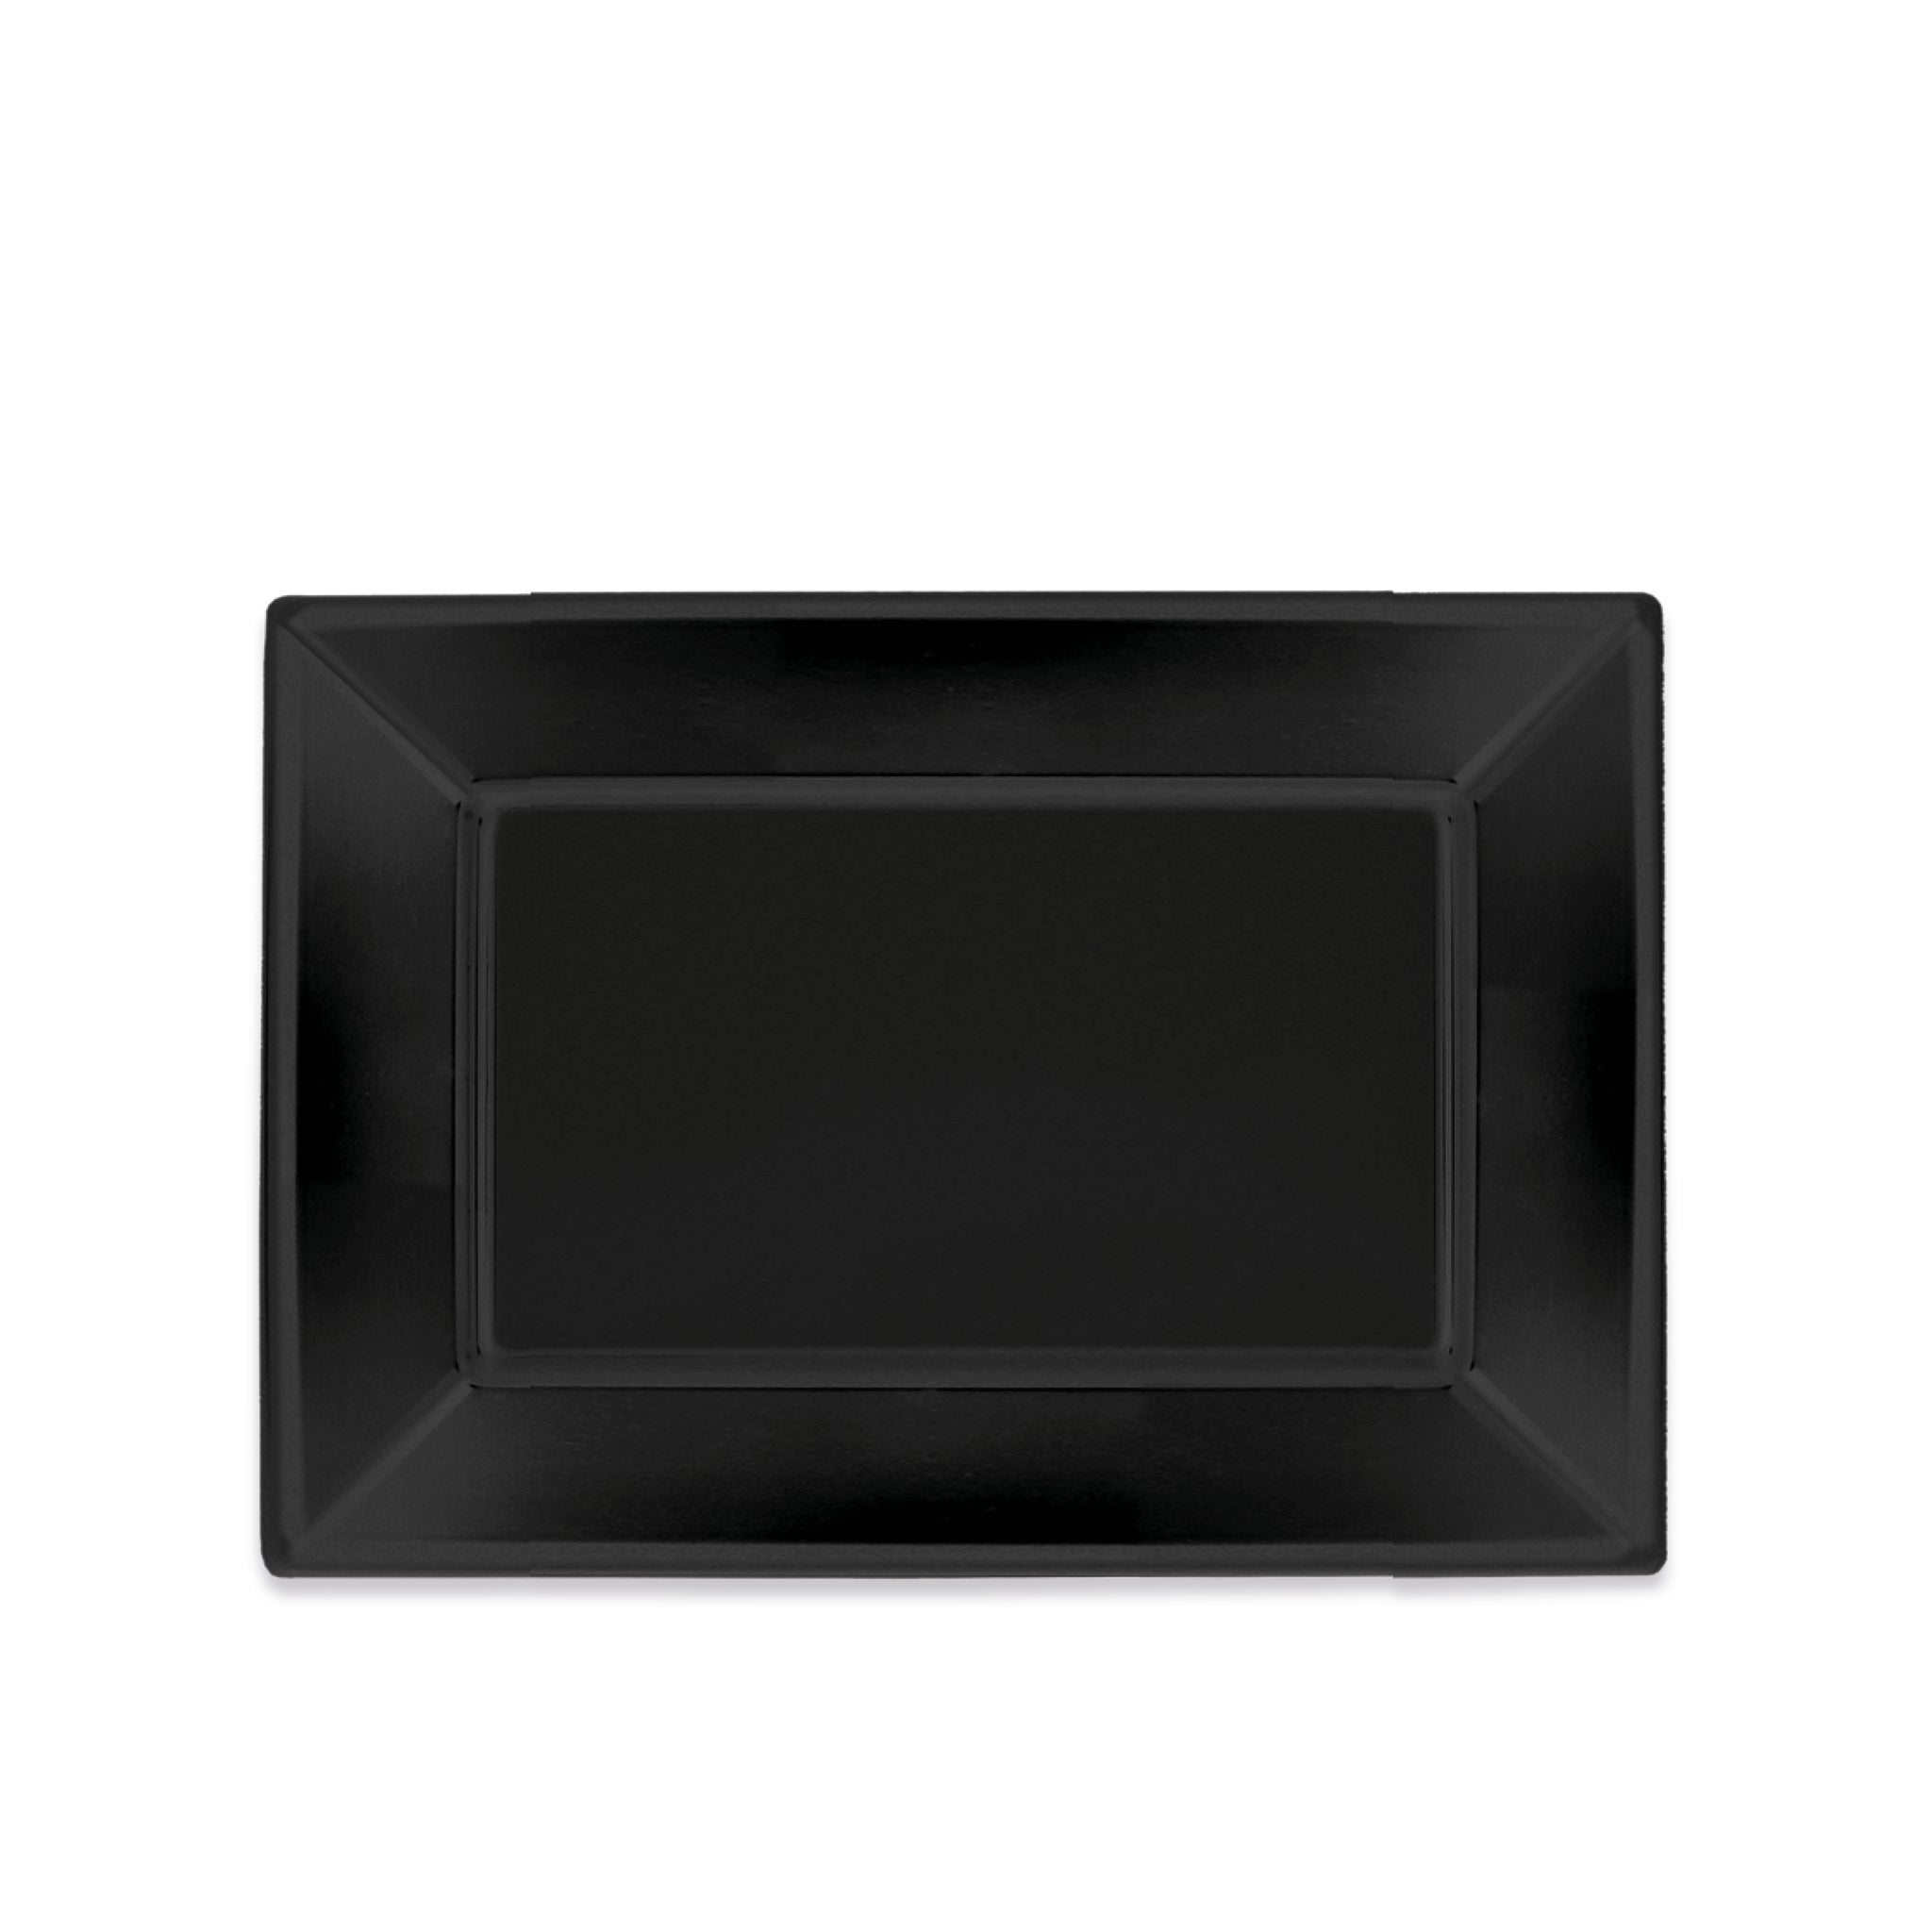 Rectangular tray 33 x 22.5 cm black